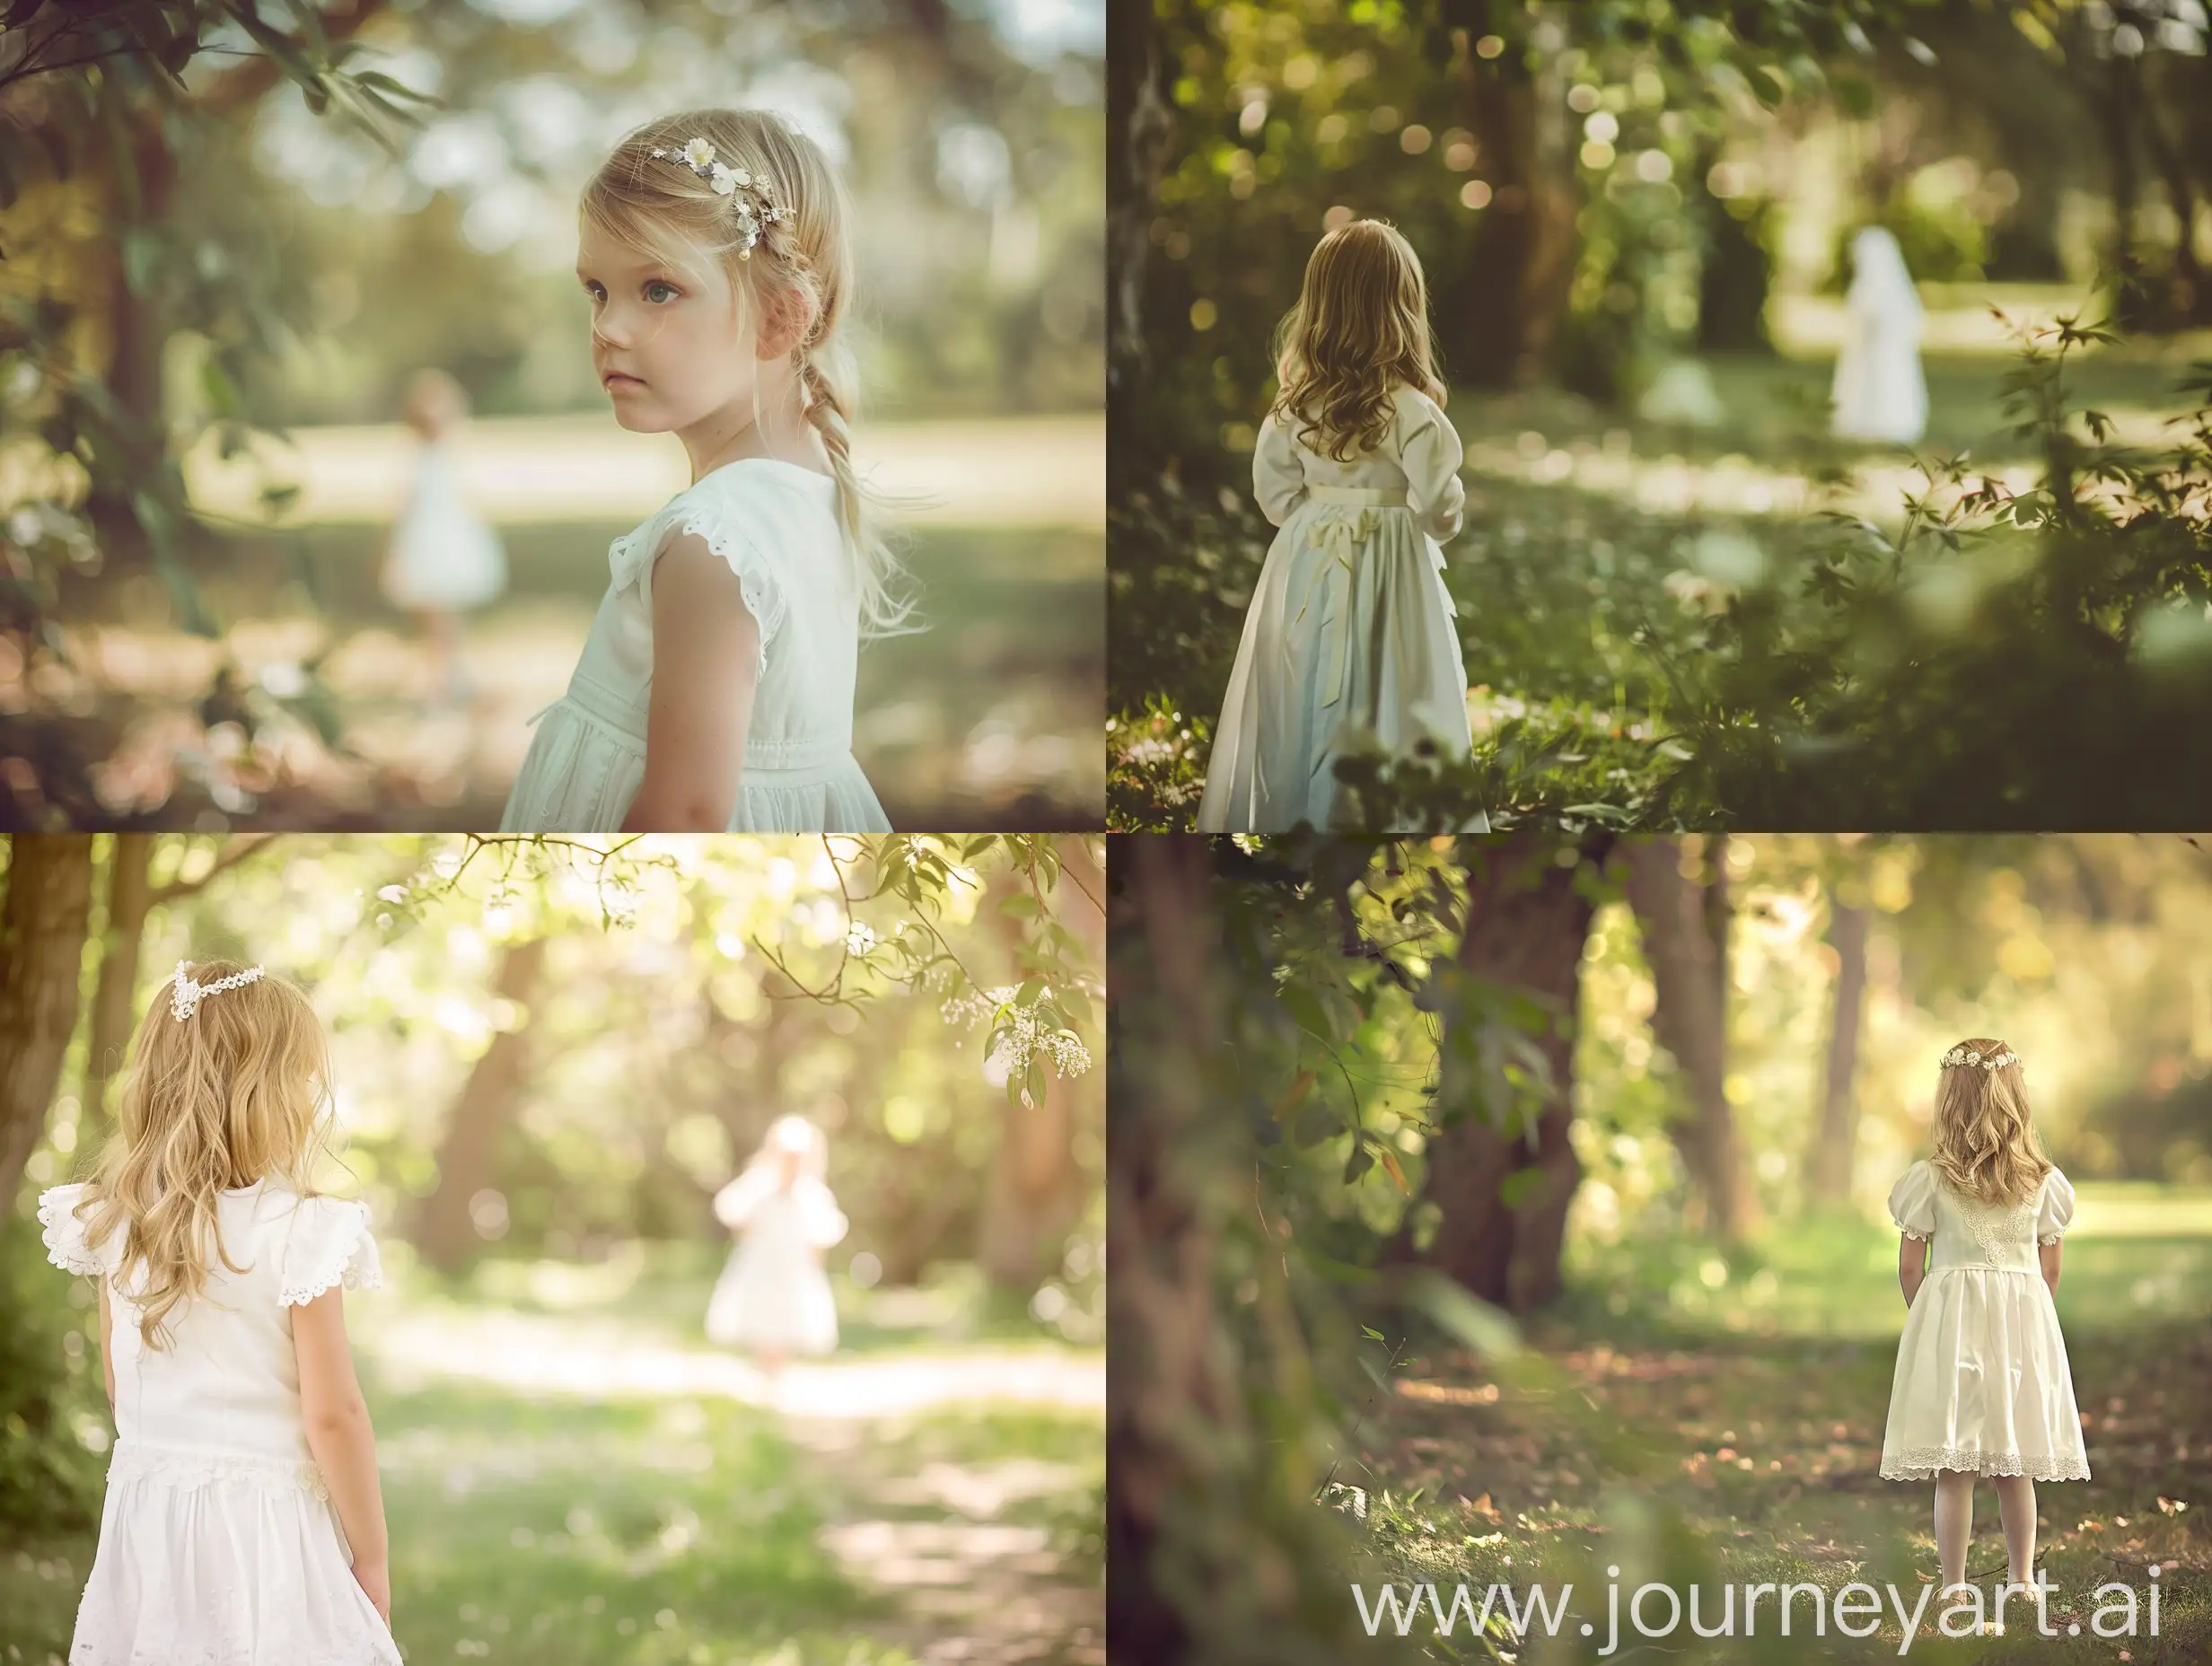 Childs-First-Communion-Serene-Park-Scene-with-Girl-in-Alba-Dress